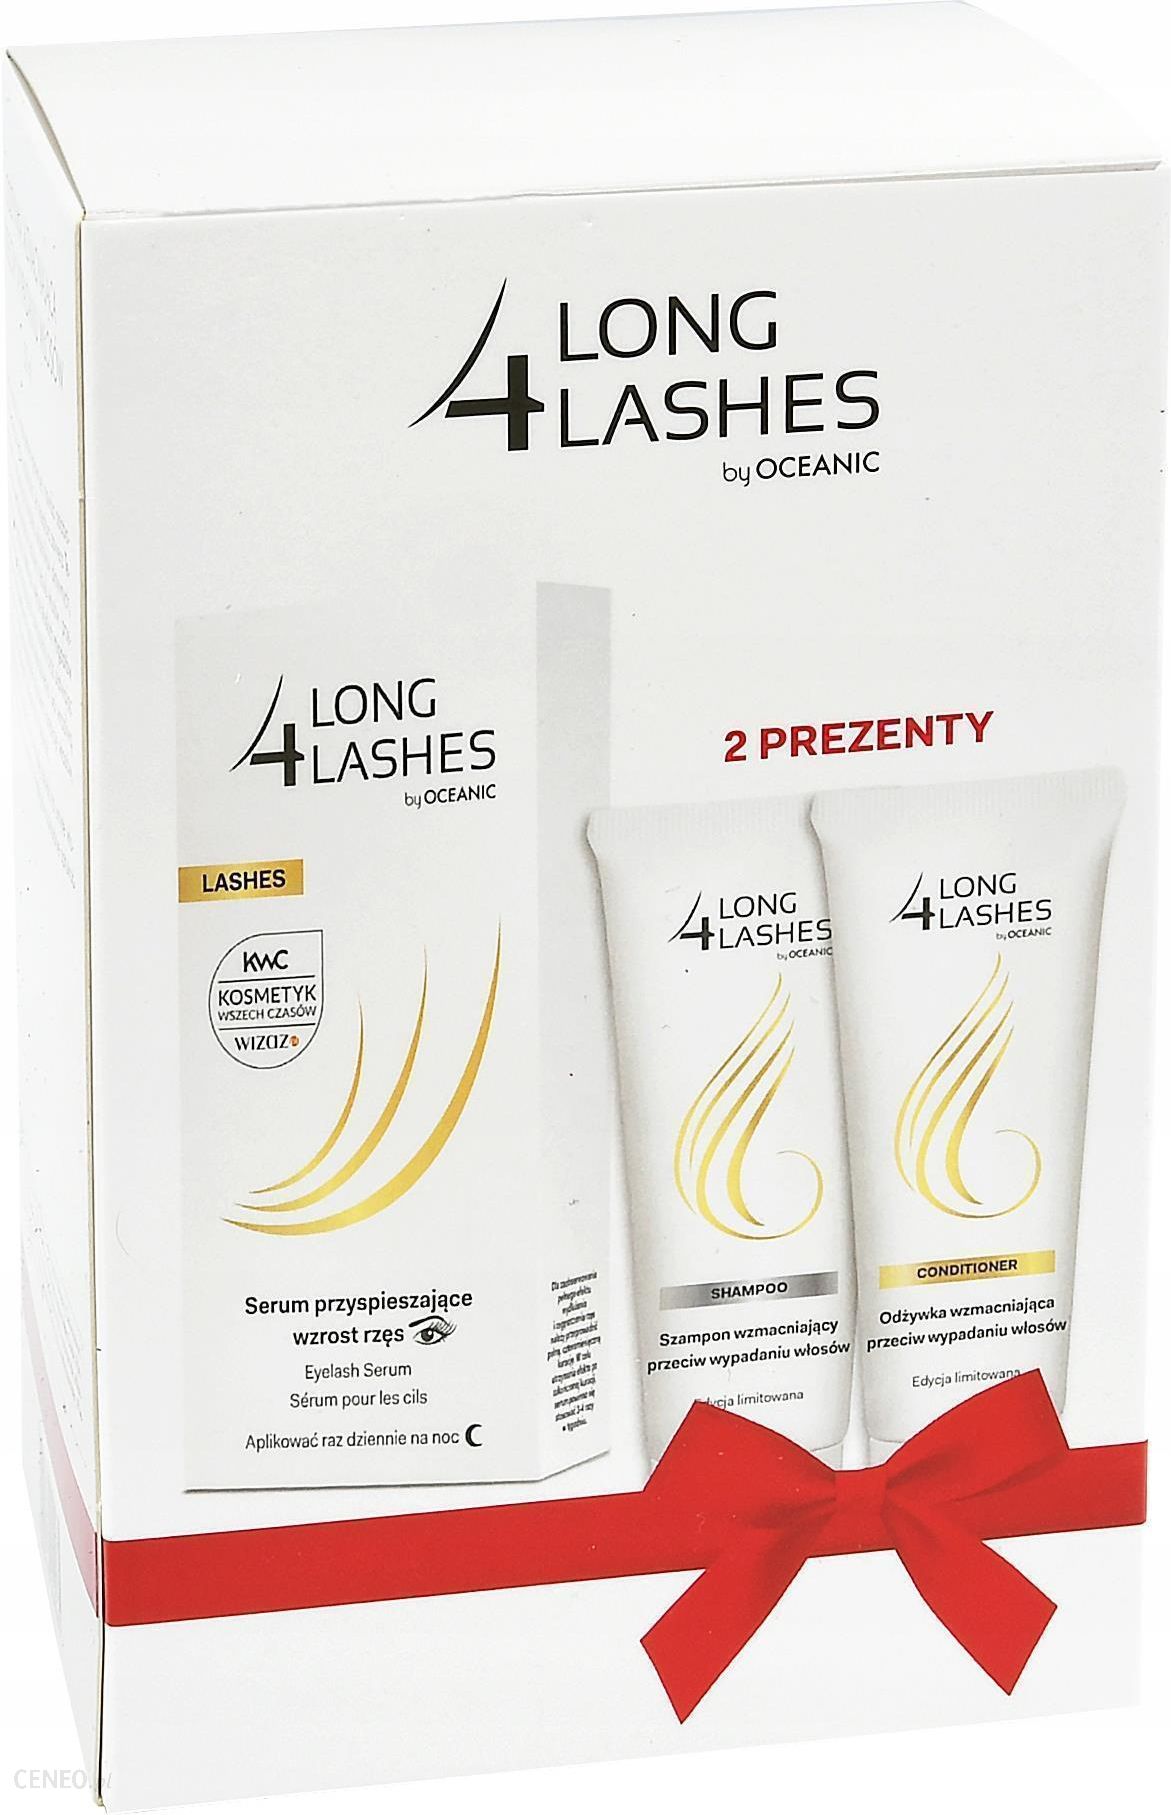 long 4 lashes szampon ceneo